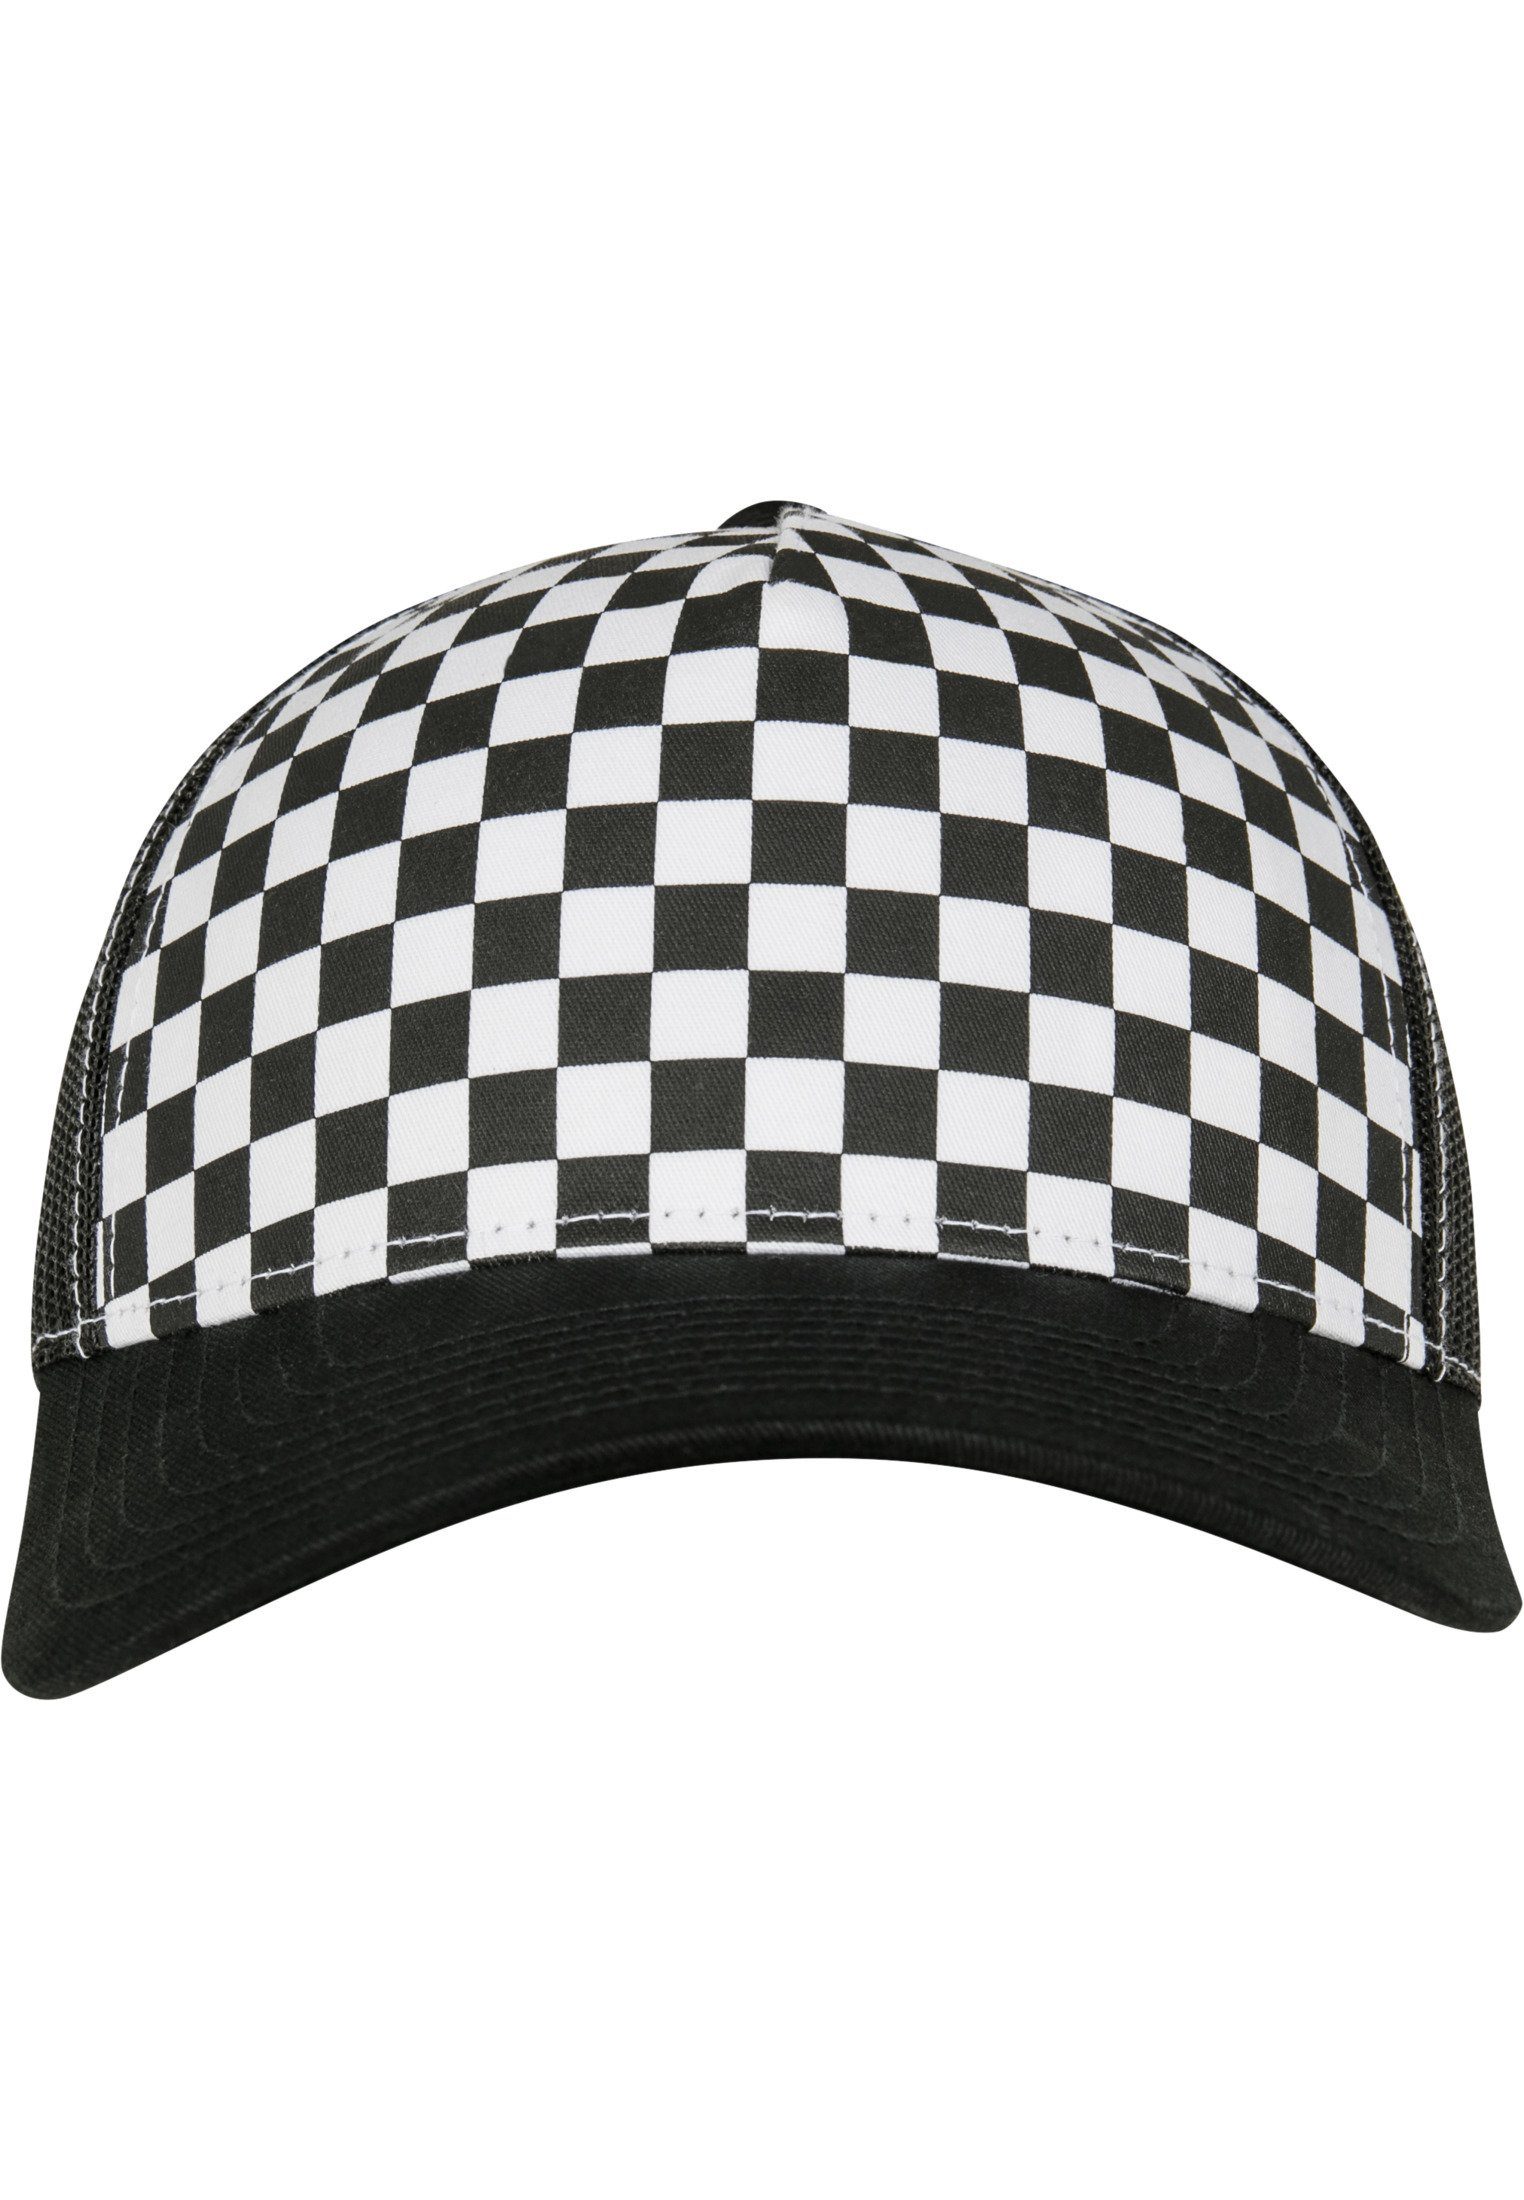 Flexfit Checkerboard Retro Flex Cap Trucker black/white Trucker